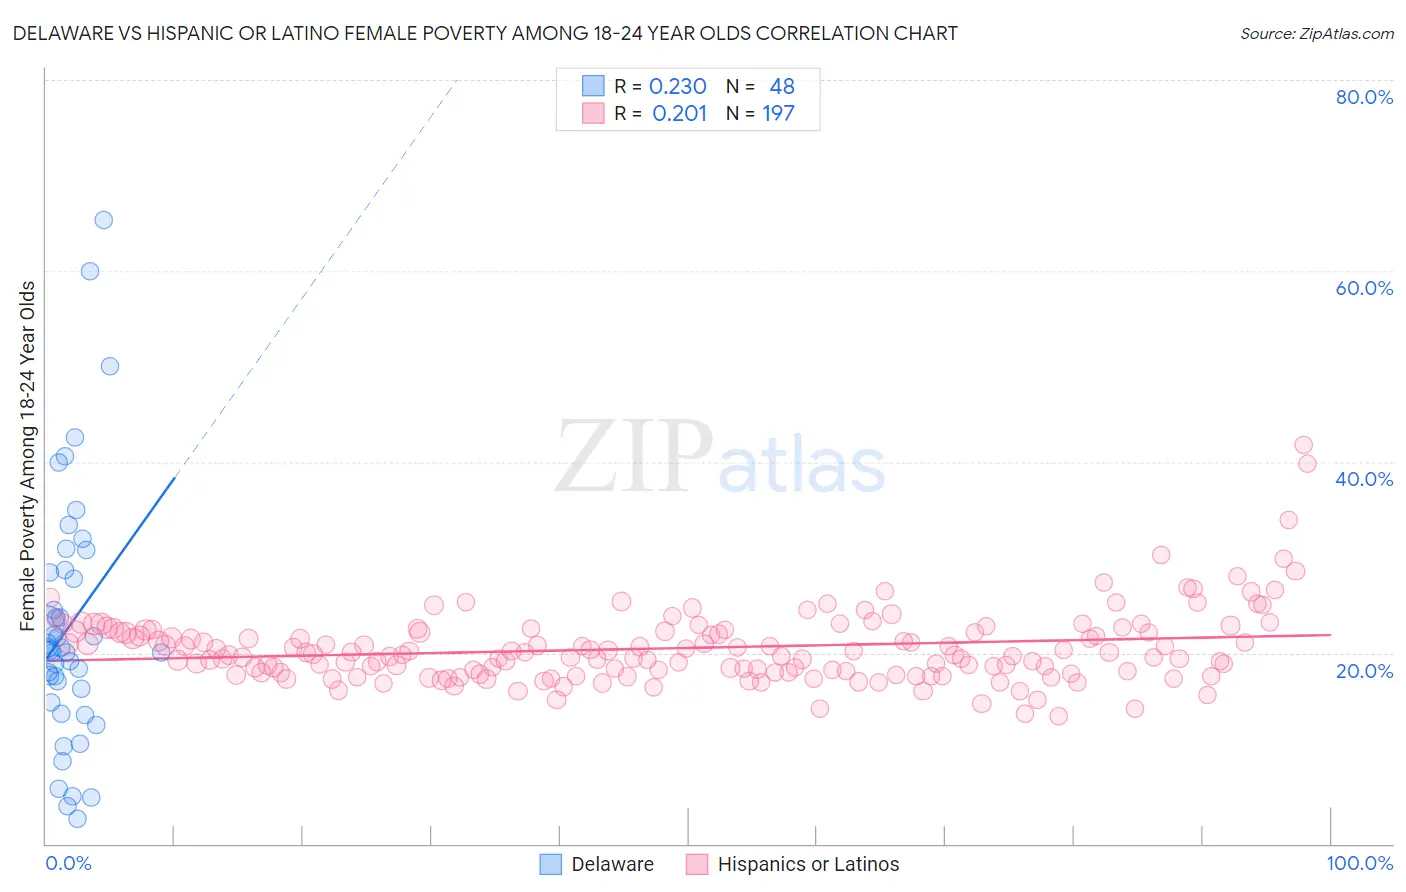 Delaware vs Hispanic or Latino Female Poverty Among 18-24 Year Olds